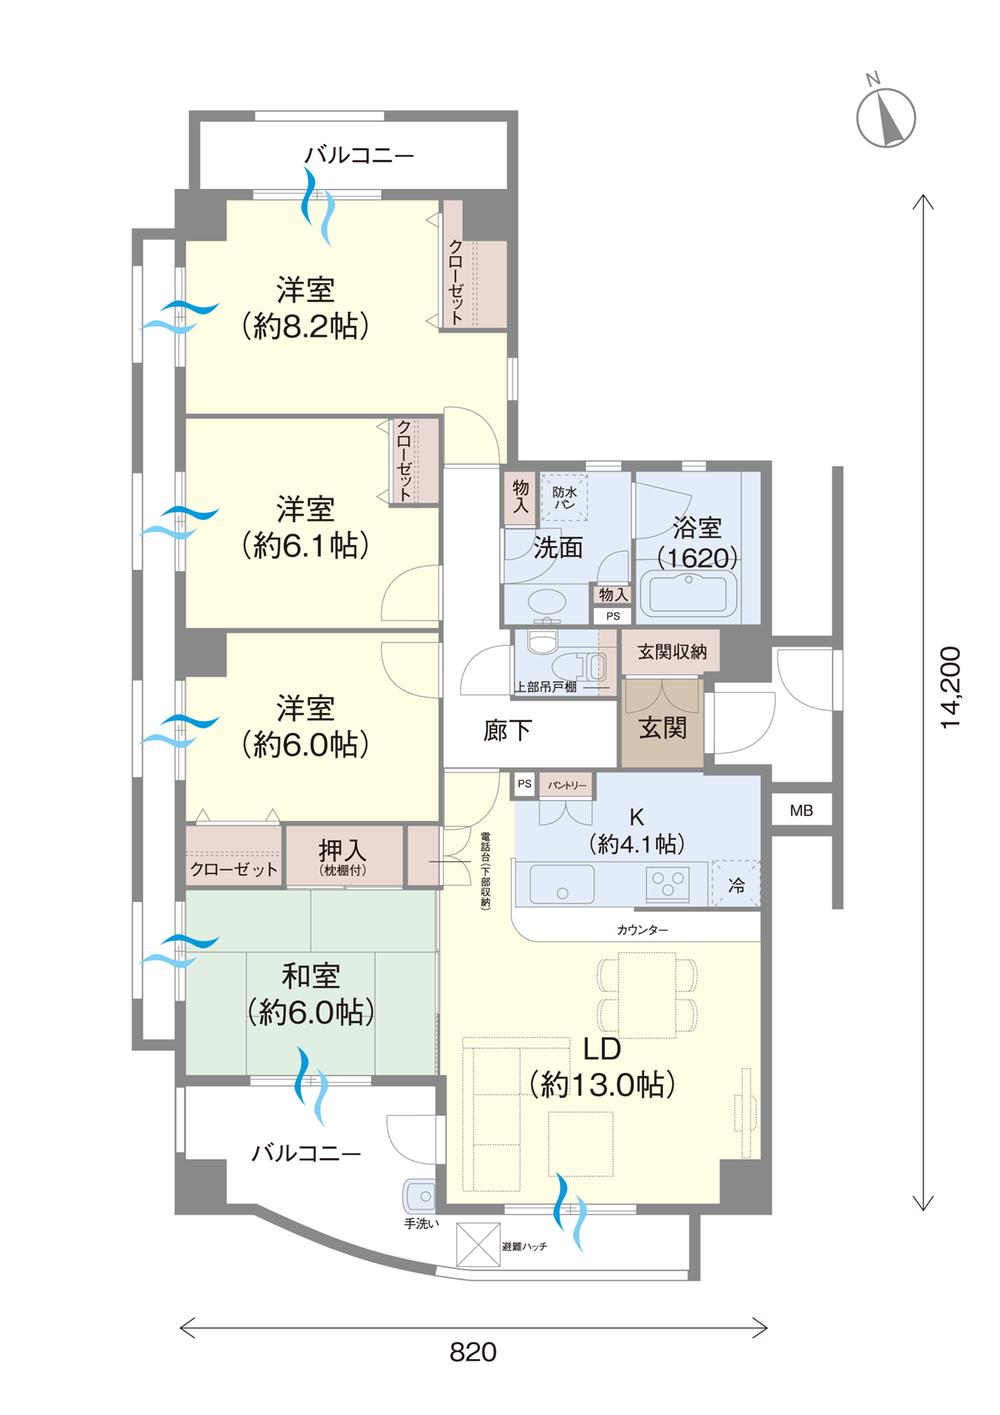 Floor plan. 4LDK, Price 18,800,000 yen, Footprint 95.3 sq m , Balcony area 16.35 sq m